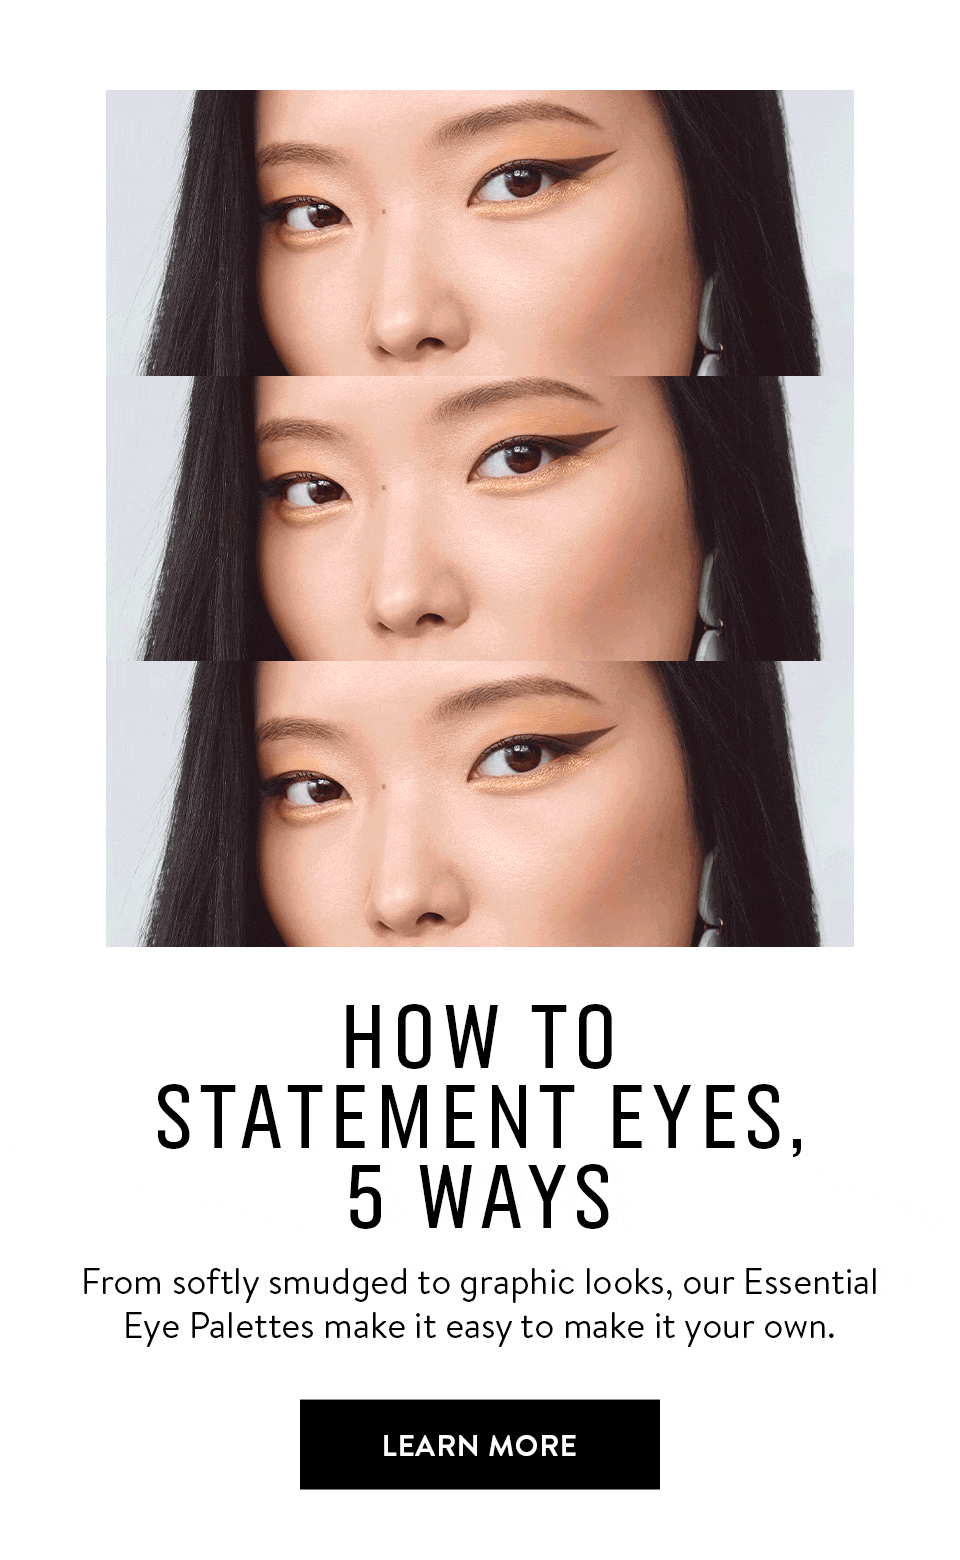 How To: Statement Eyes - 5 ways